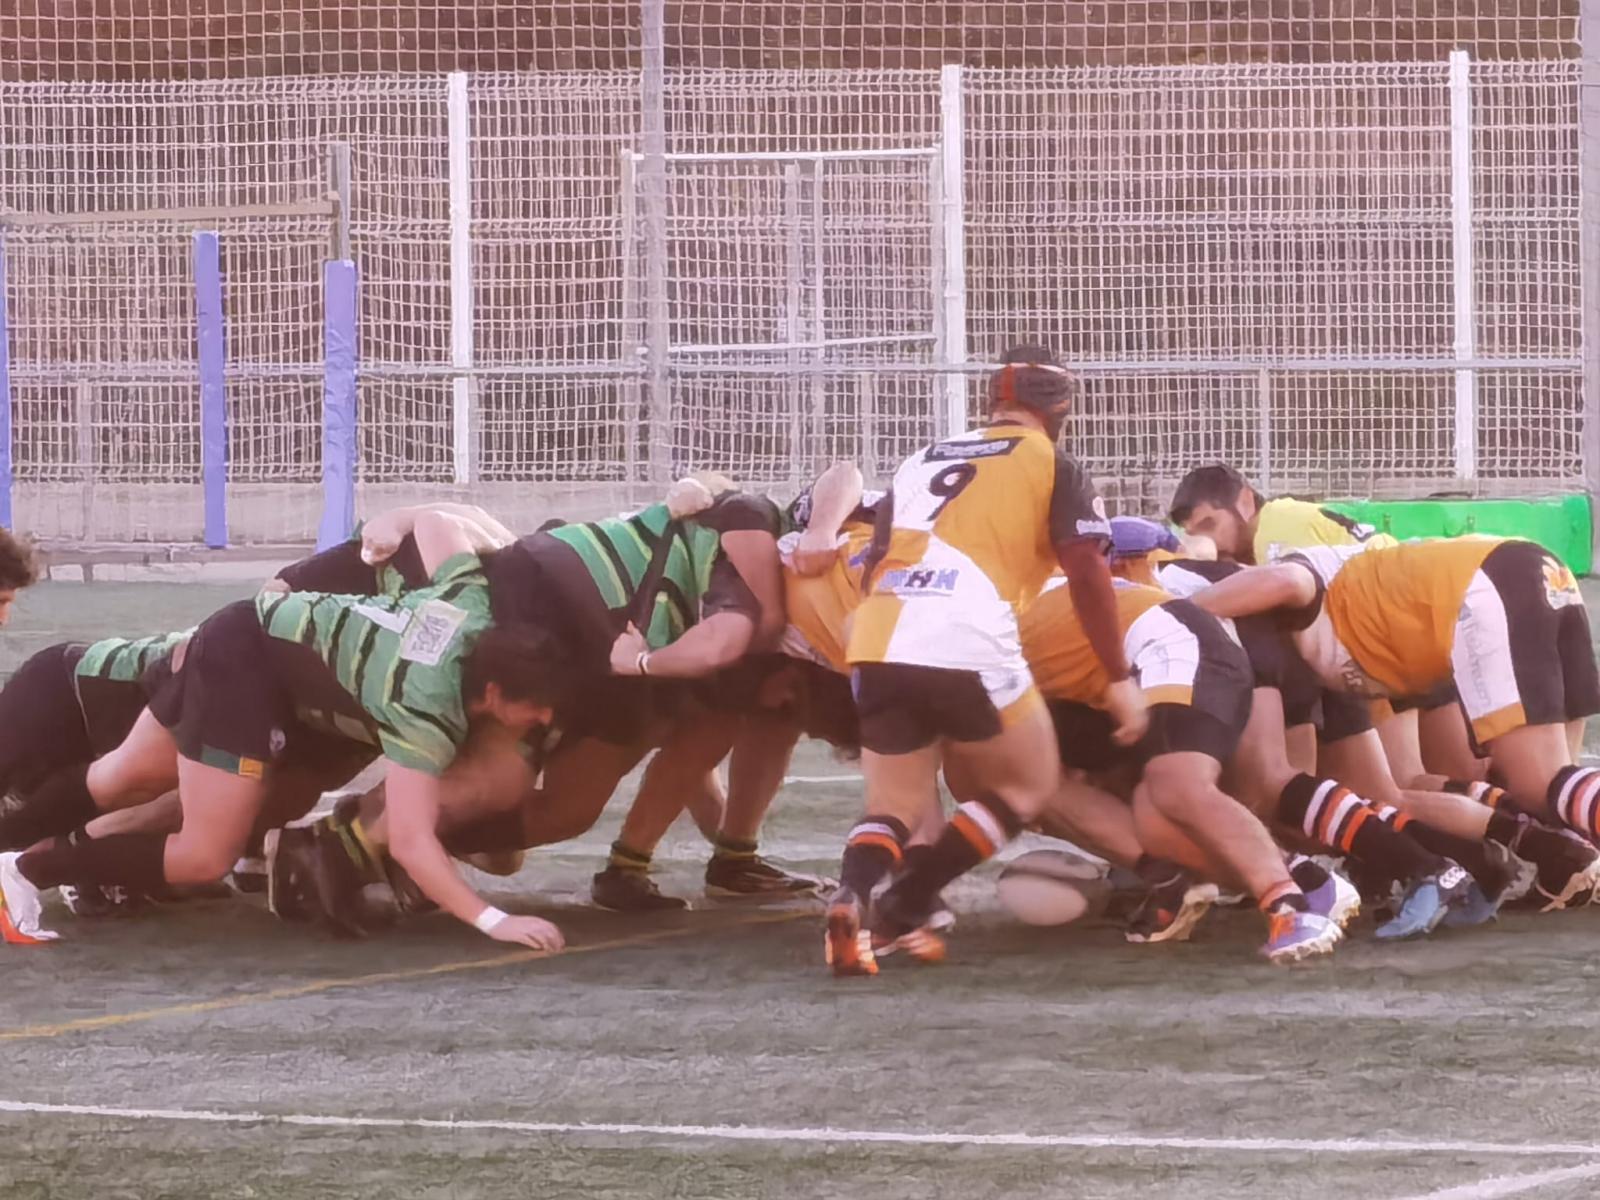 Sabadell Rugby Club